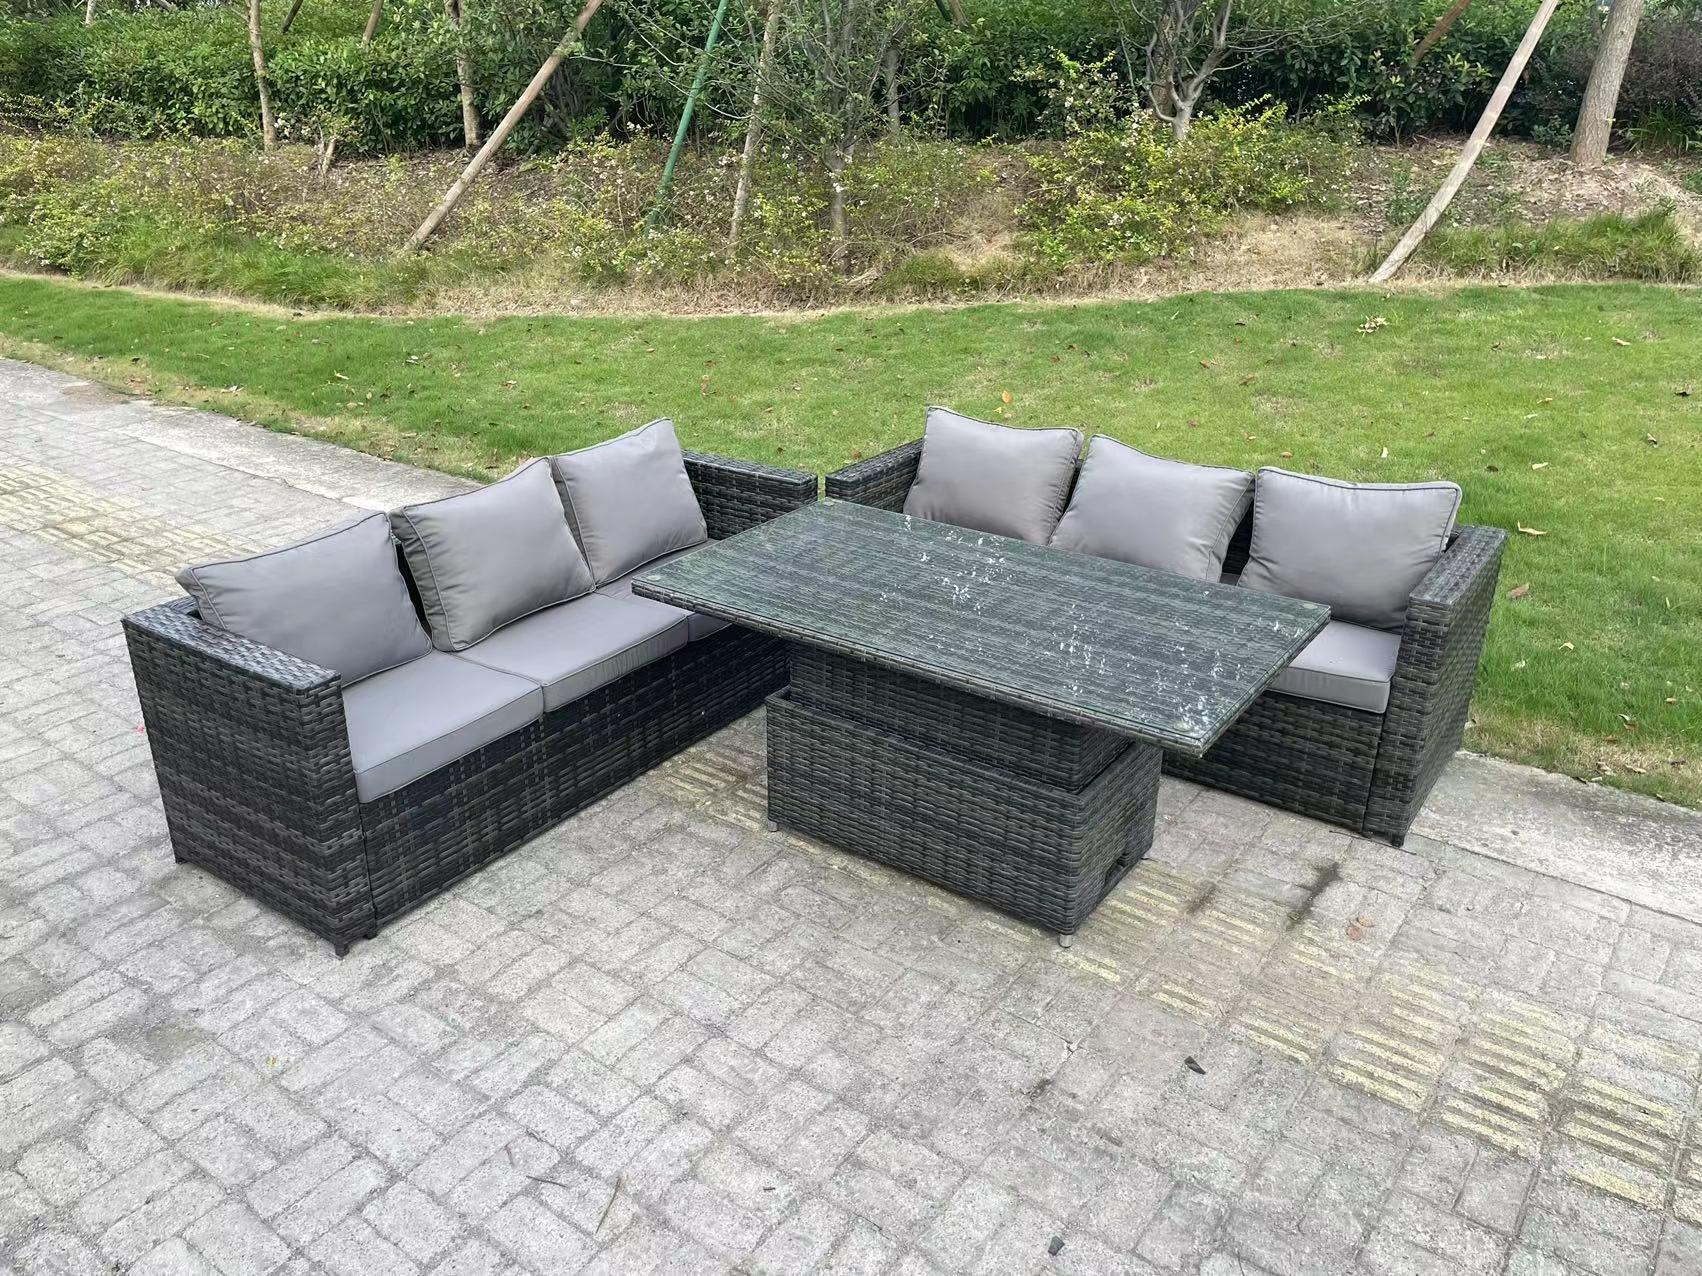 6 Seater Outdoor Rattan Sofa Set Garden Furniture Adjustable Rising Lifting Dining Table Dark Grey